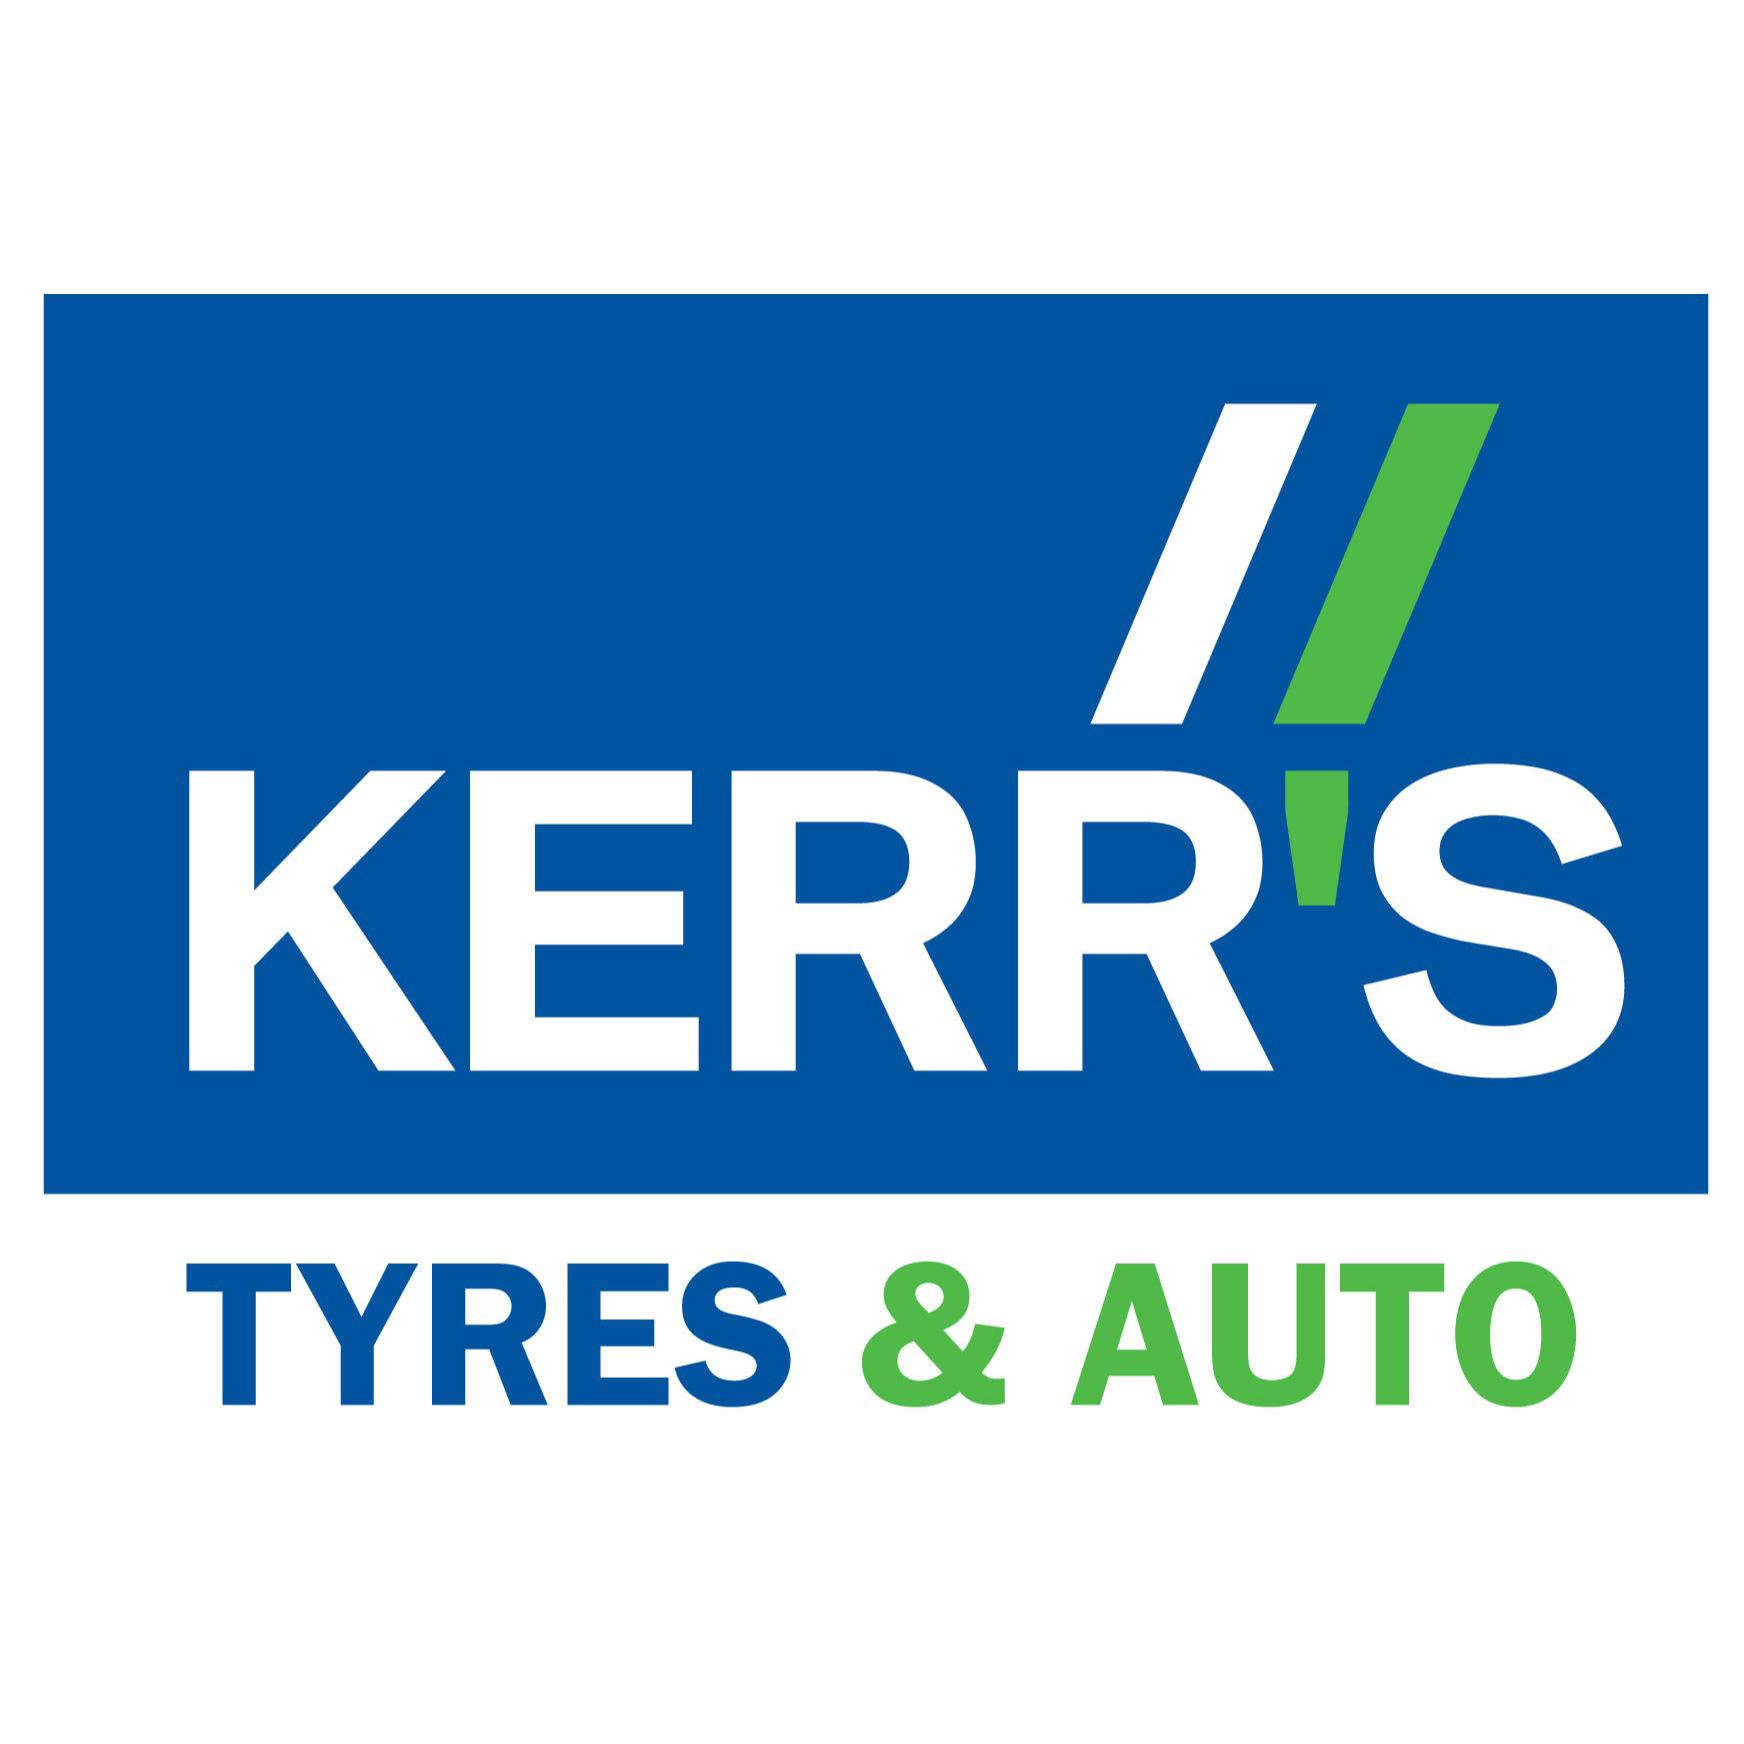 Kerr's Tyres & Auto - Belfast, County Antrim BT5 7LH - 02890 796552 | ShowMeLocal.com